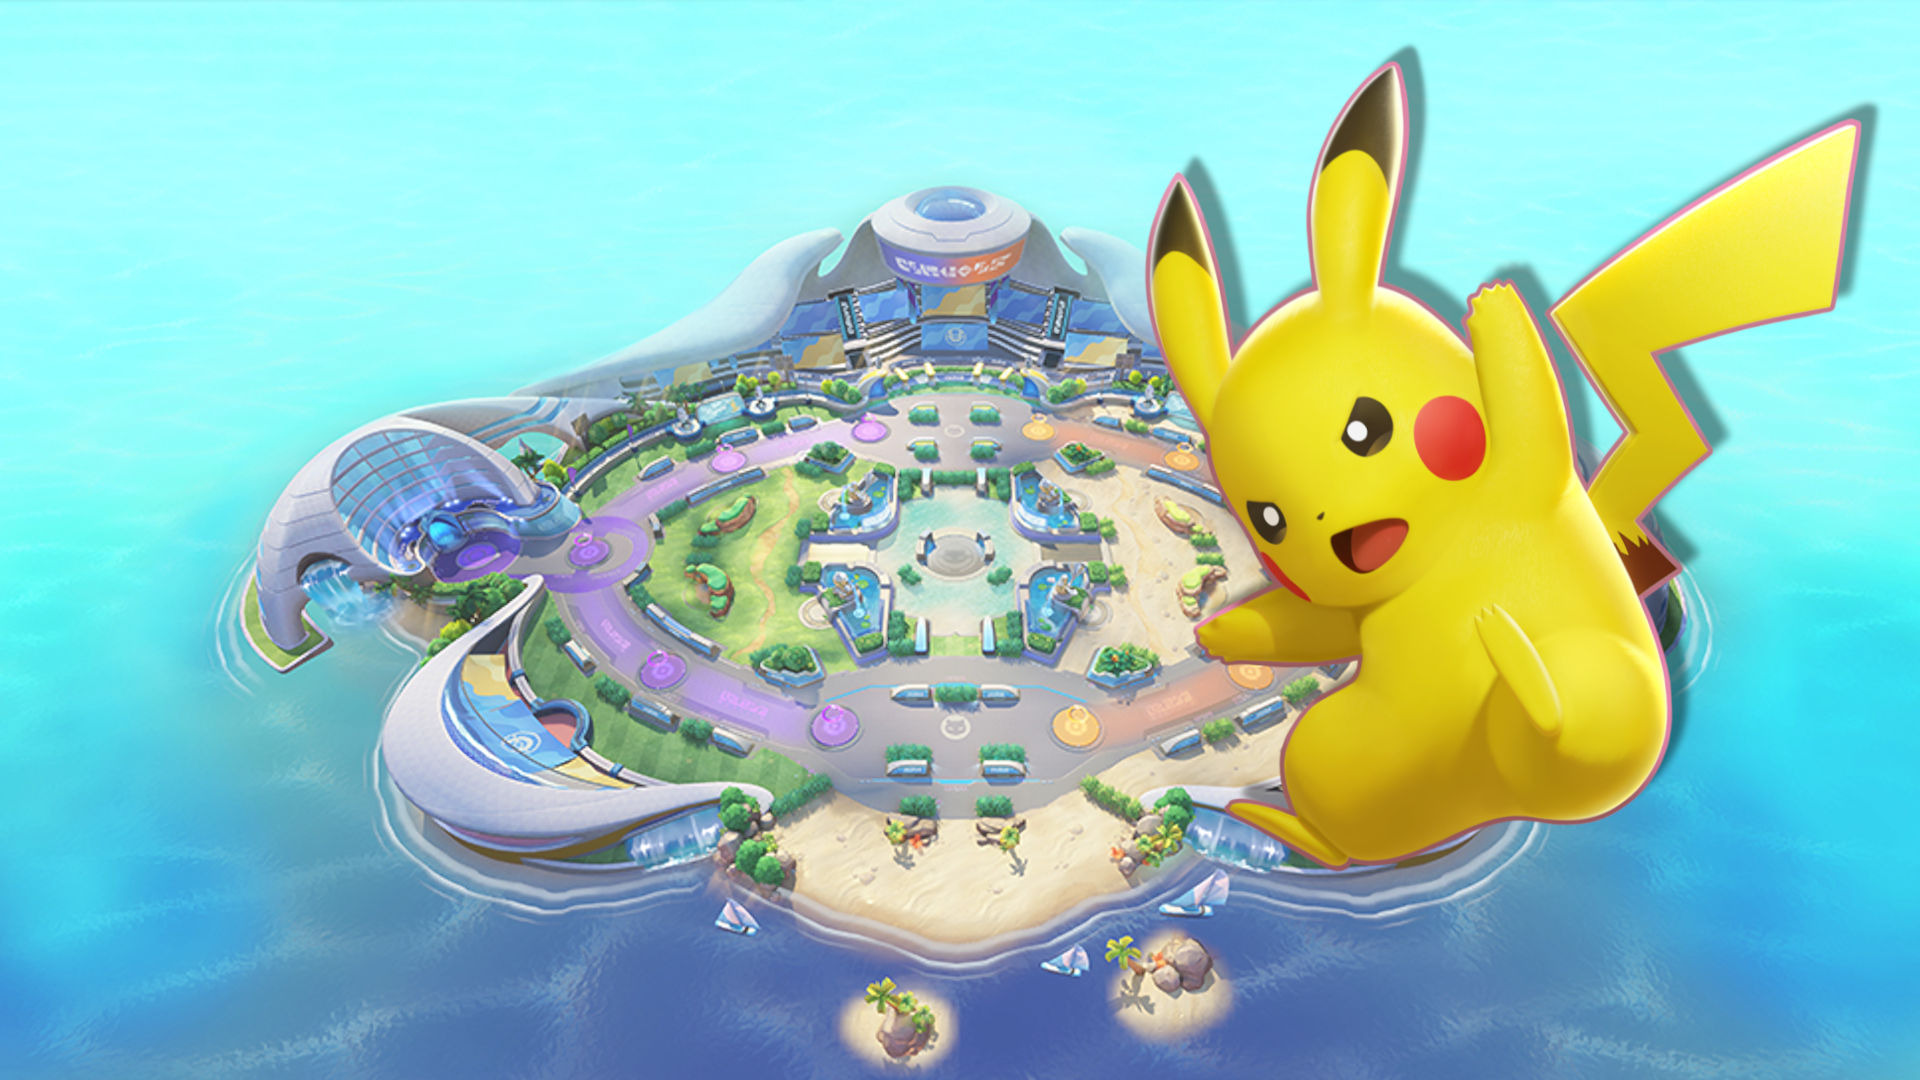 Pokémon Unite Pikachu Build, Abilities, And Items thumbnail